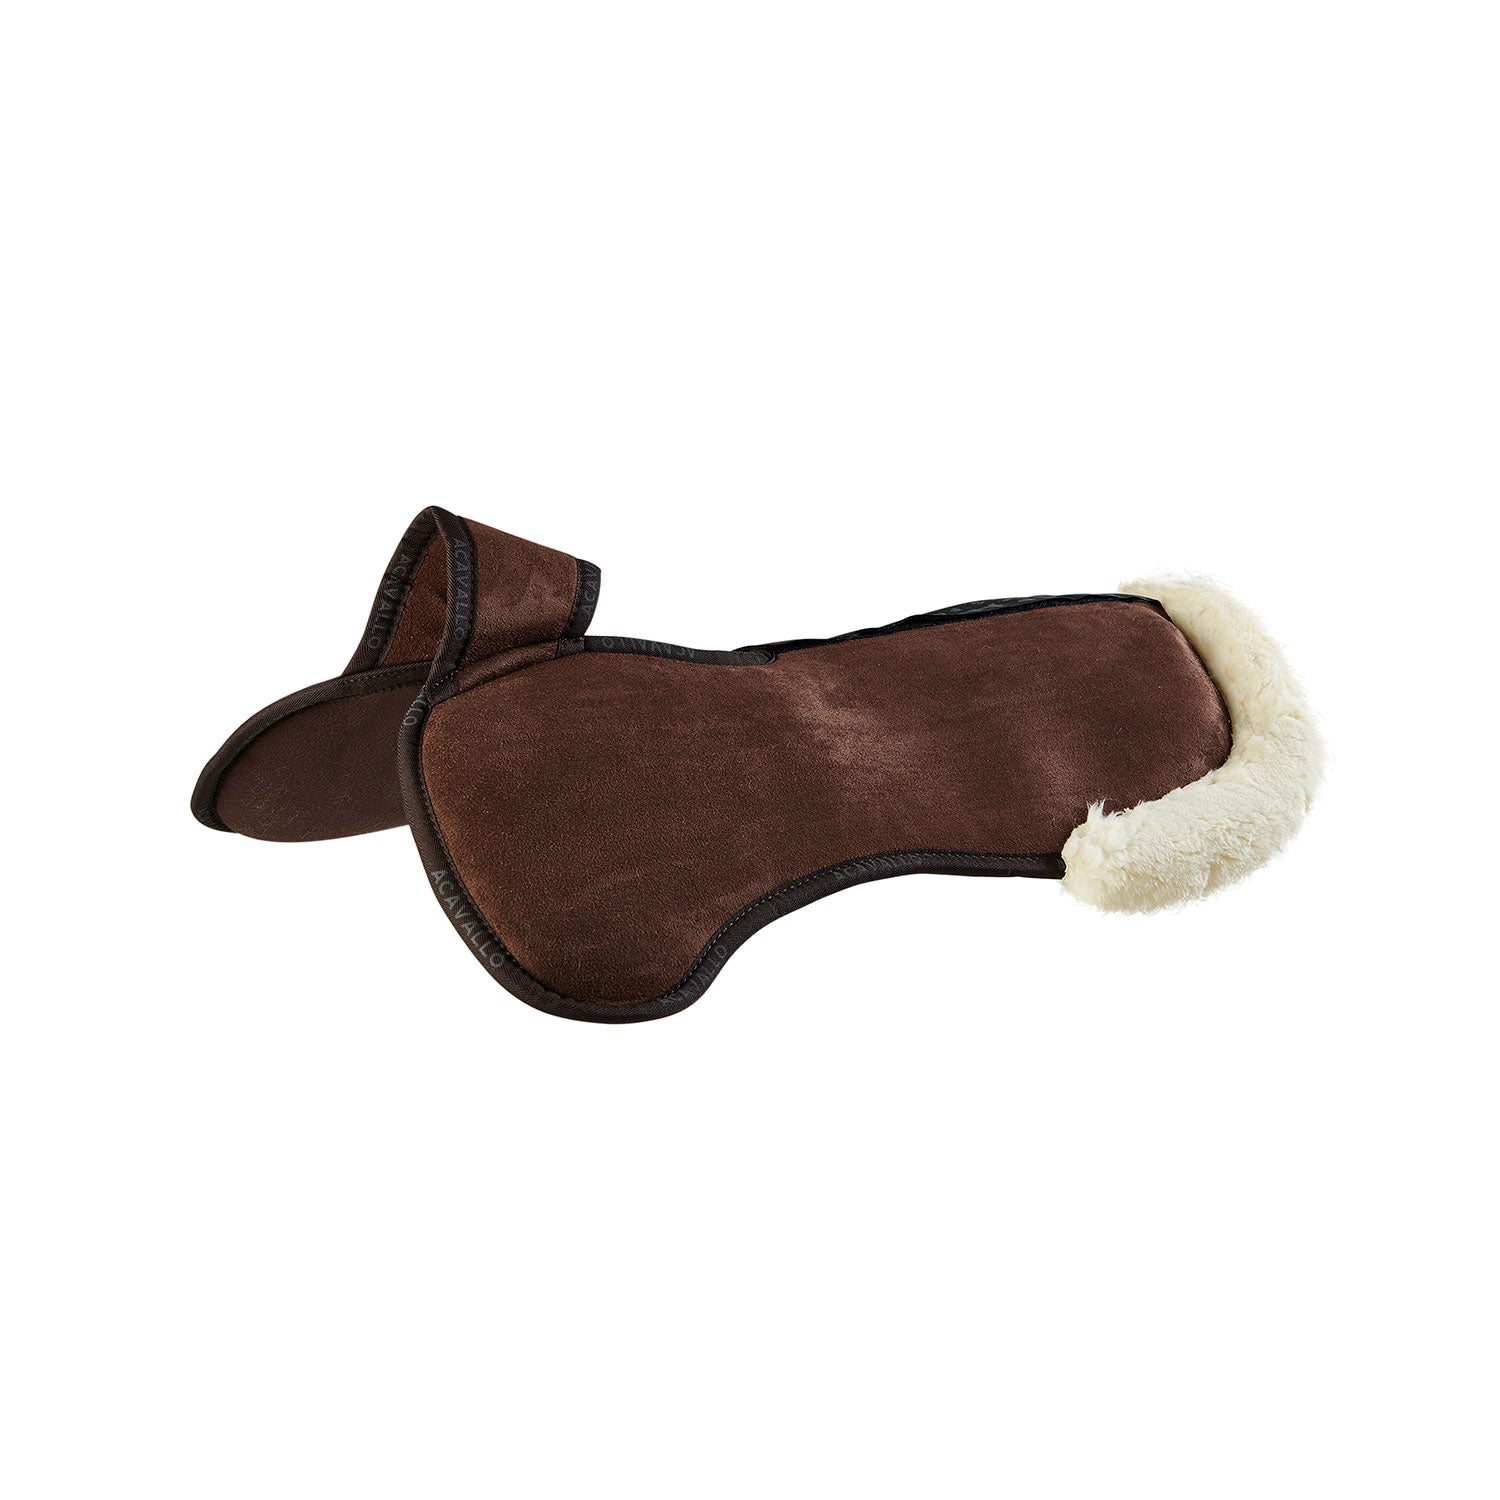 Brown adjustable memory foam saddle pad with sheepskin